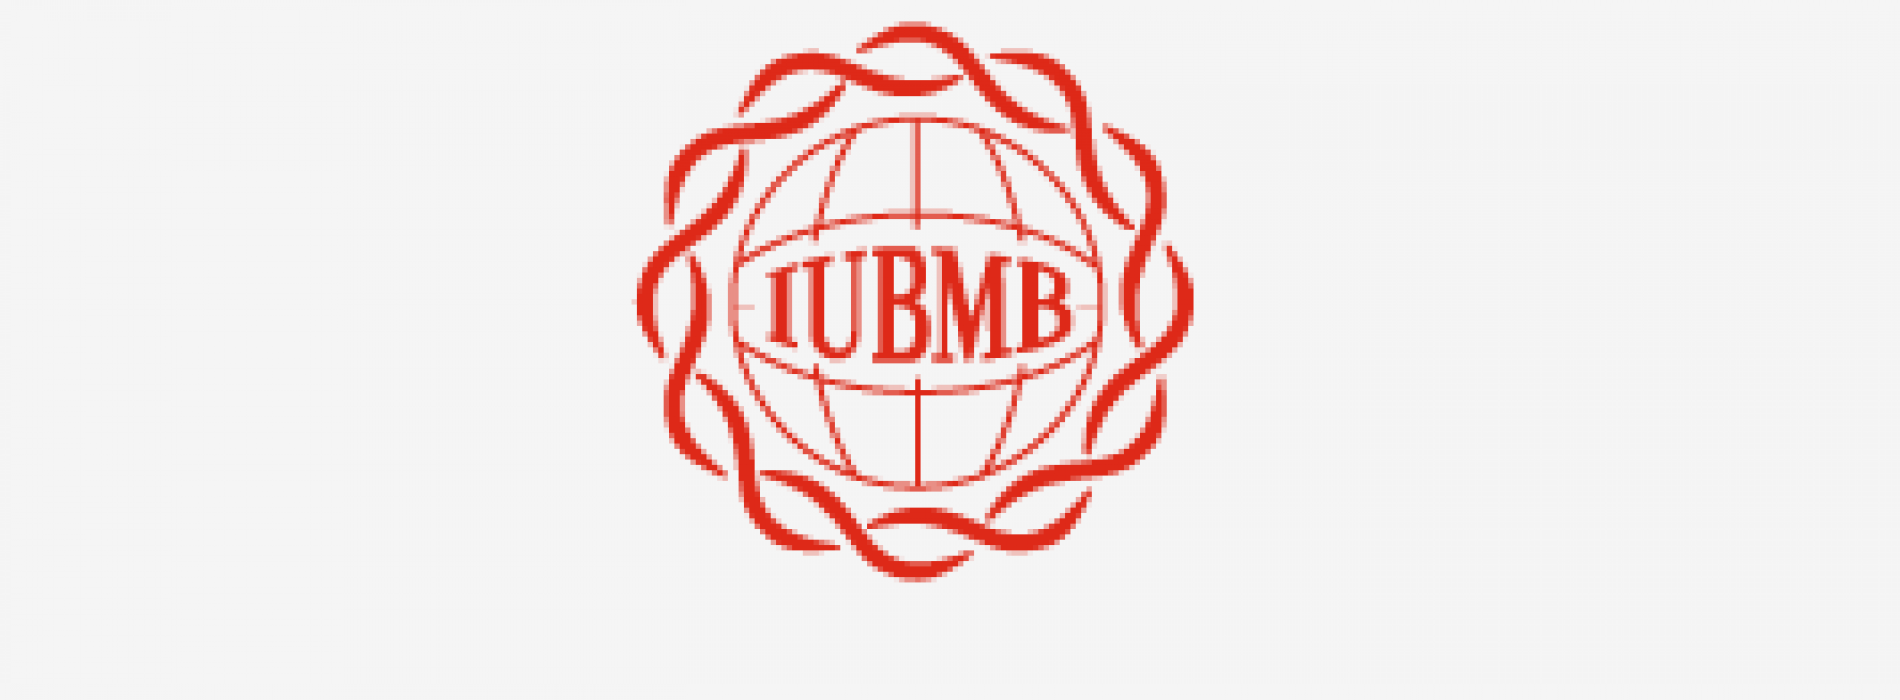 New IUBMB Adhering Body application